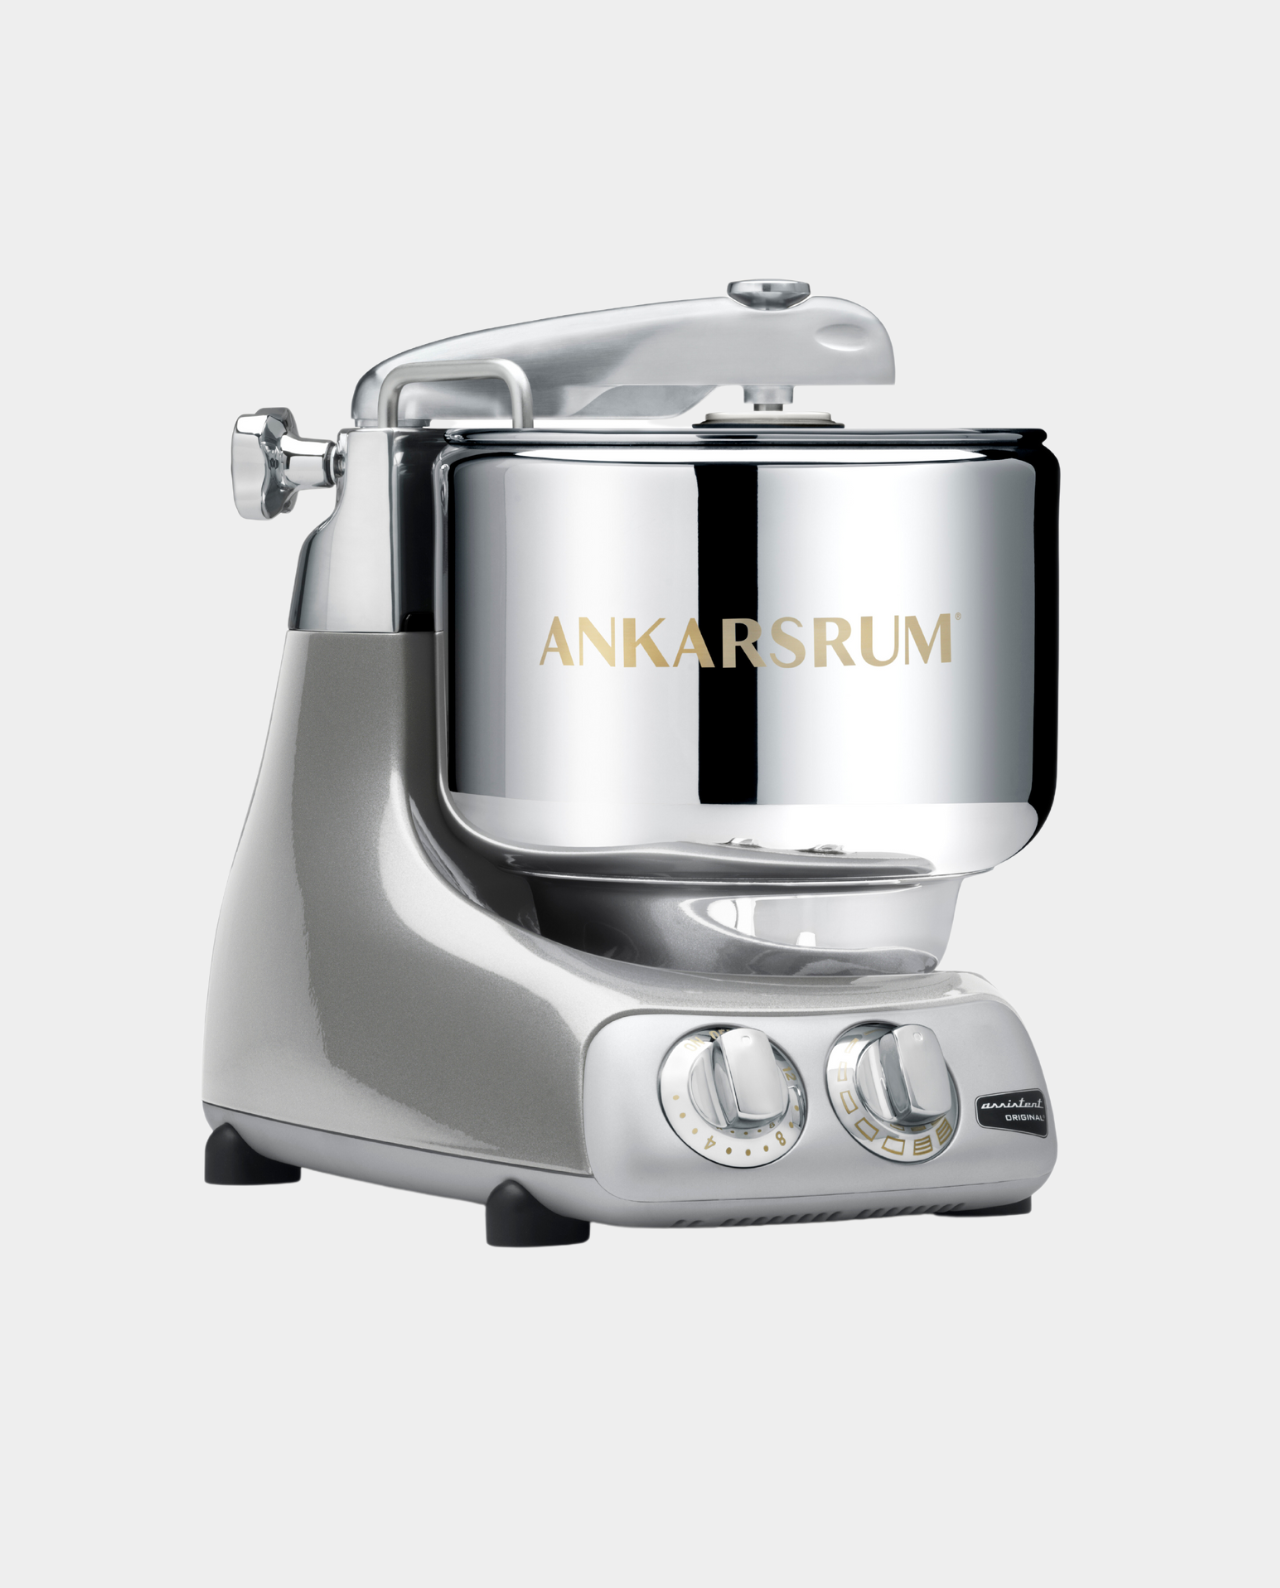 Ankarsrum Kitchen Mixer Review